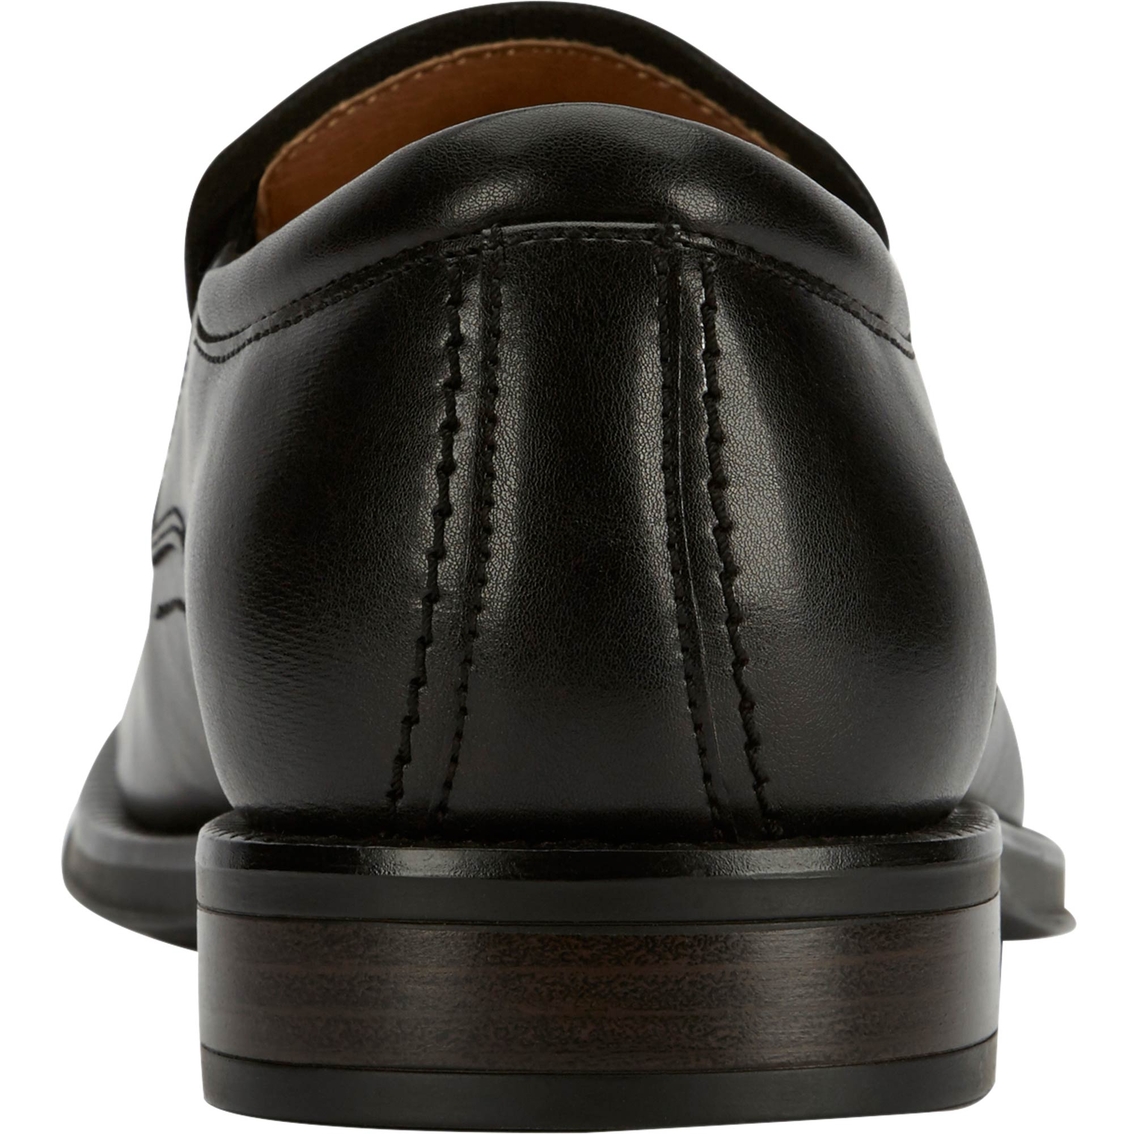 Dockers Greer Black Dress Shoes - Image 6 of 6